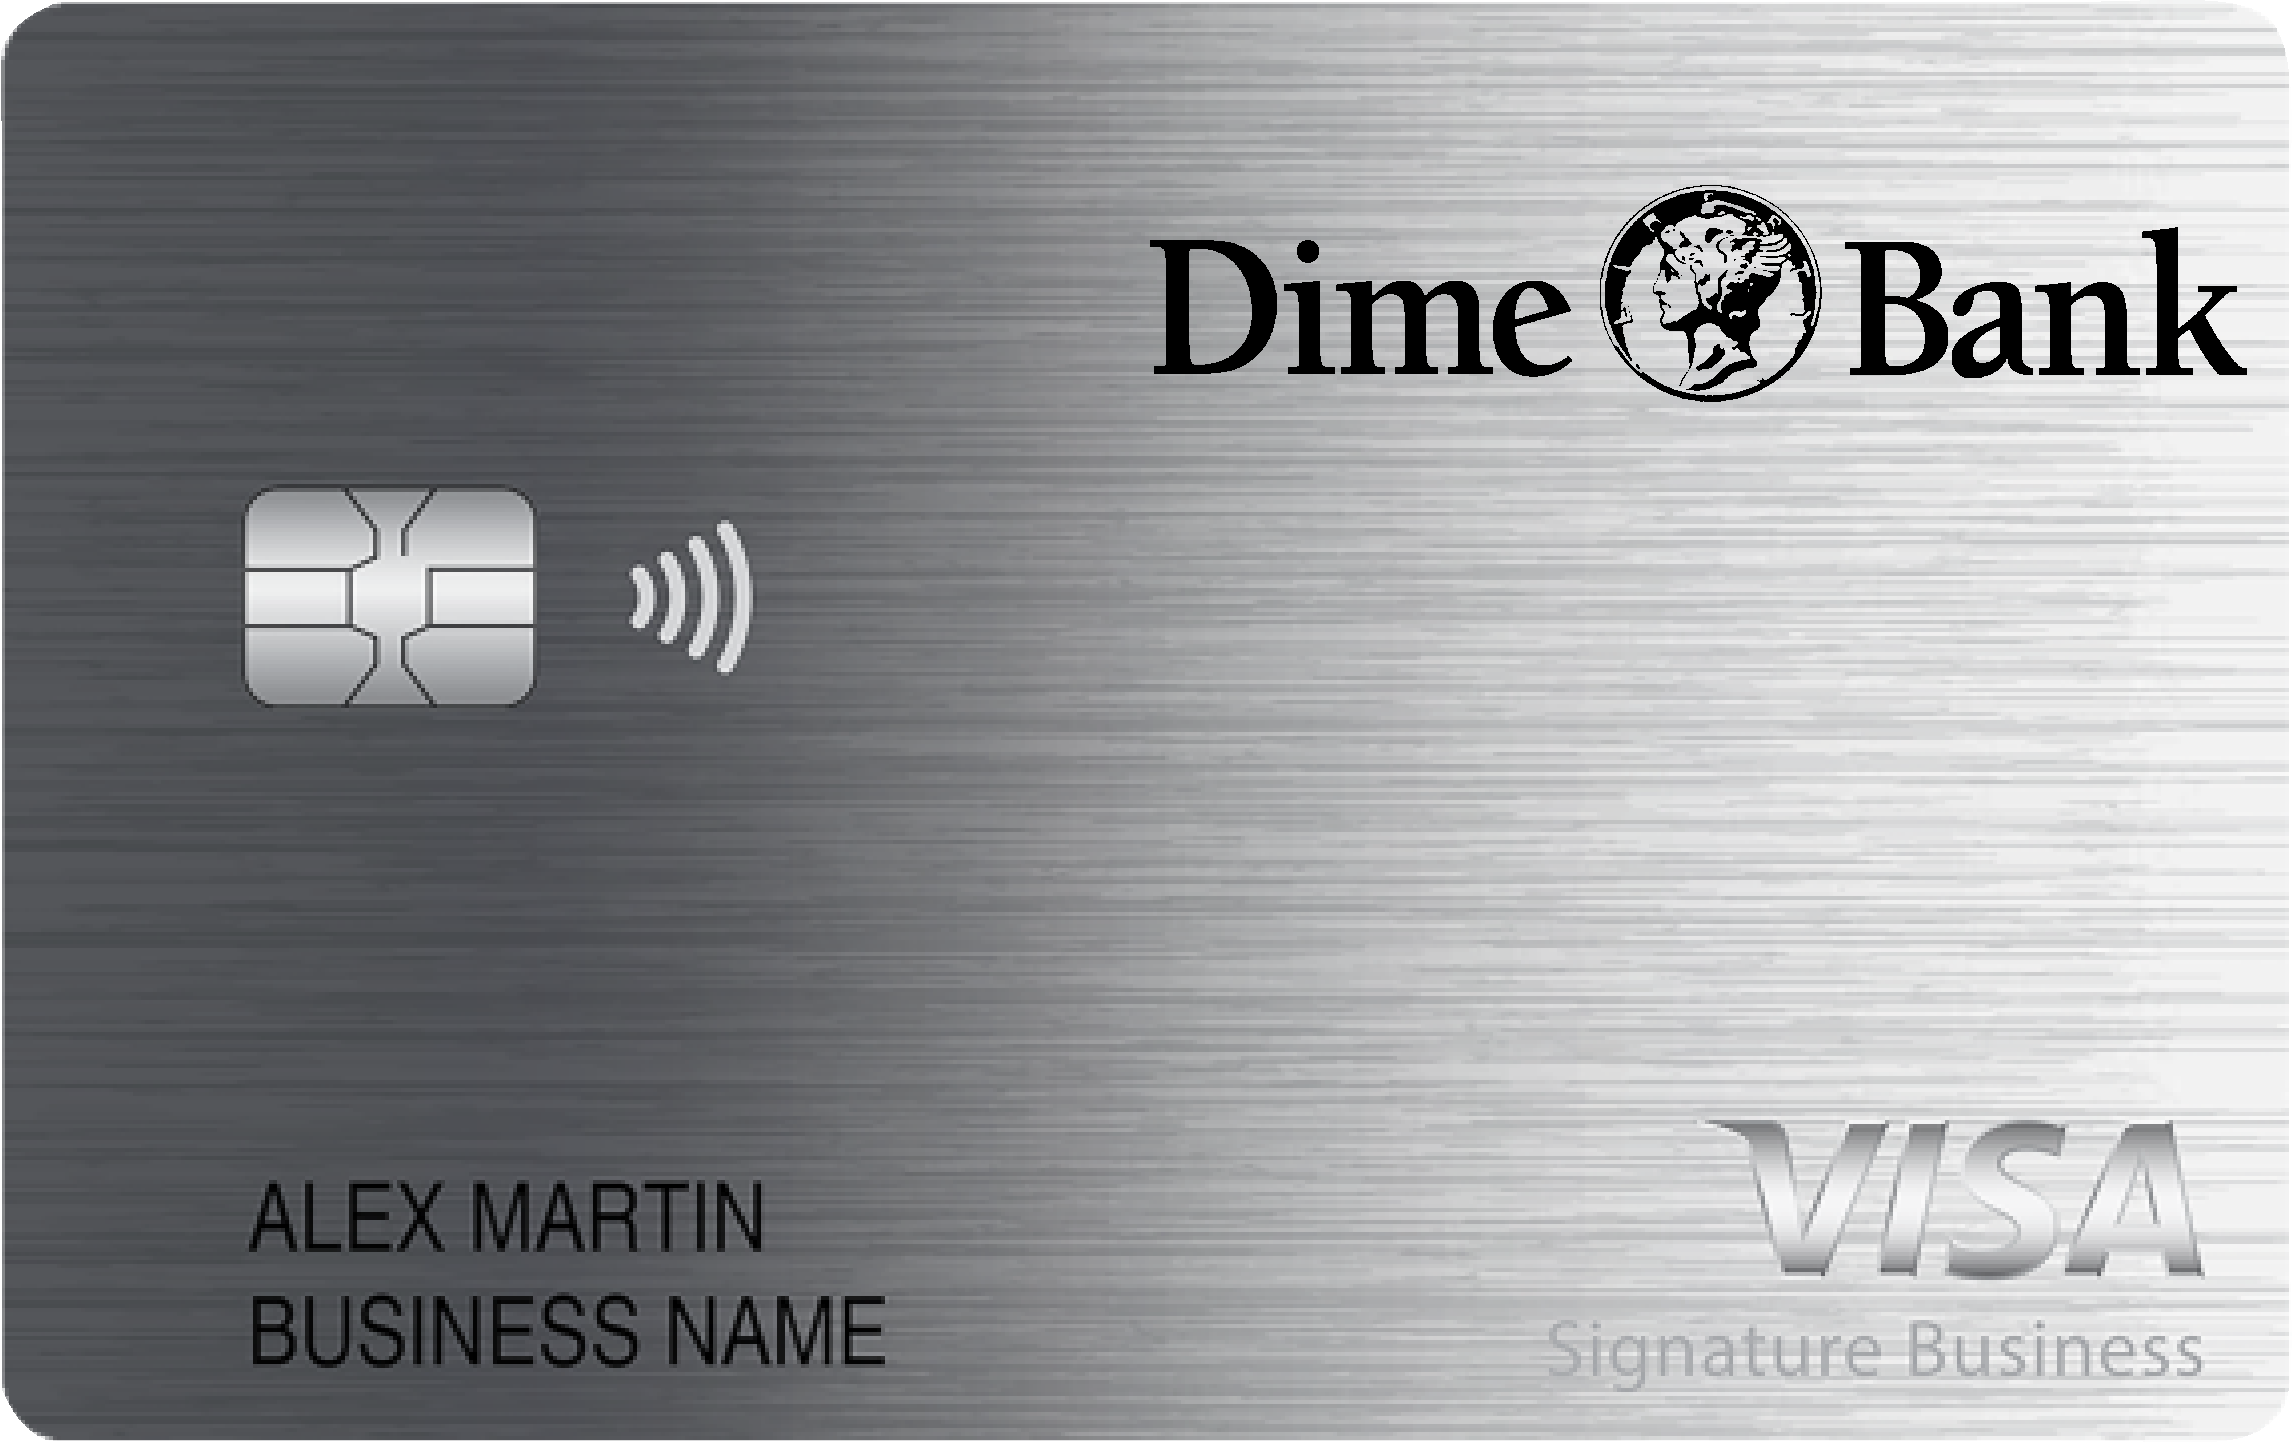 Dime Bank Smart Business Rewards Card